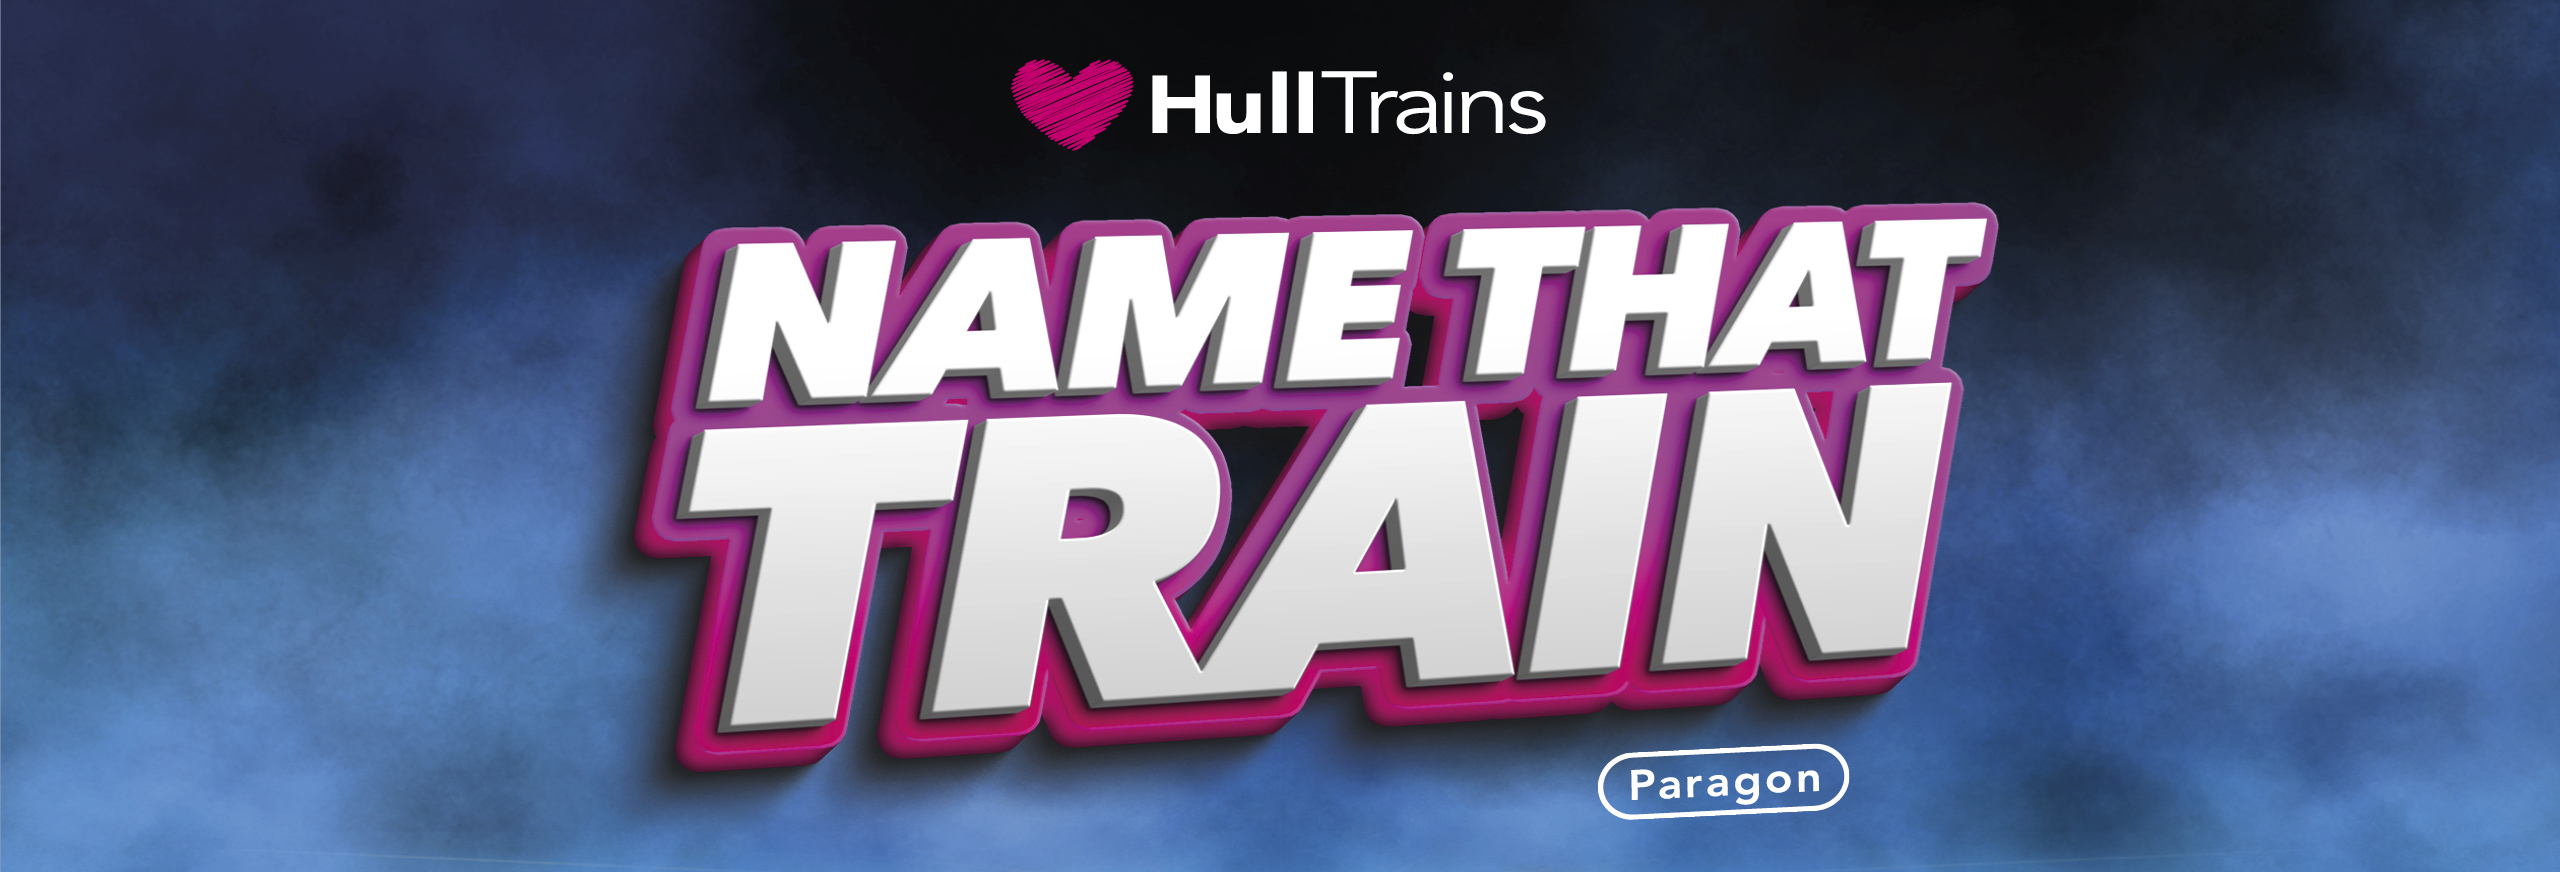 Hull Trains Name That Train logo